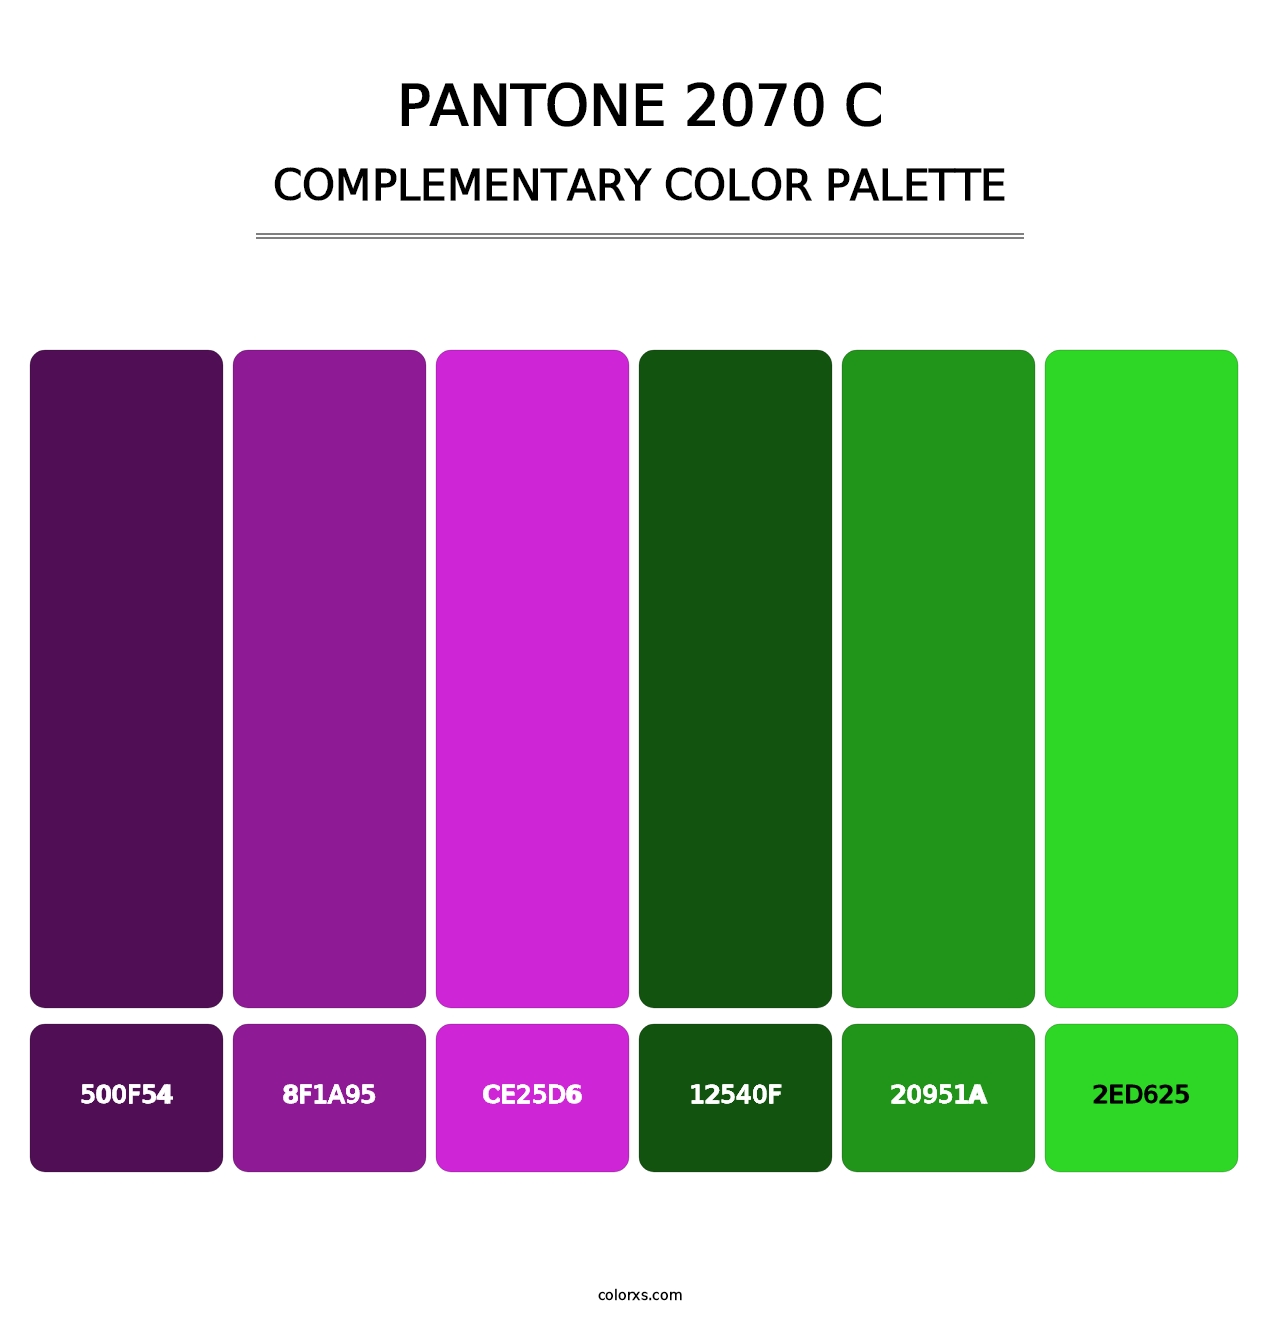 PANTONE 2070 C - Complementary Color Palette